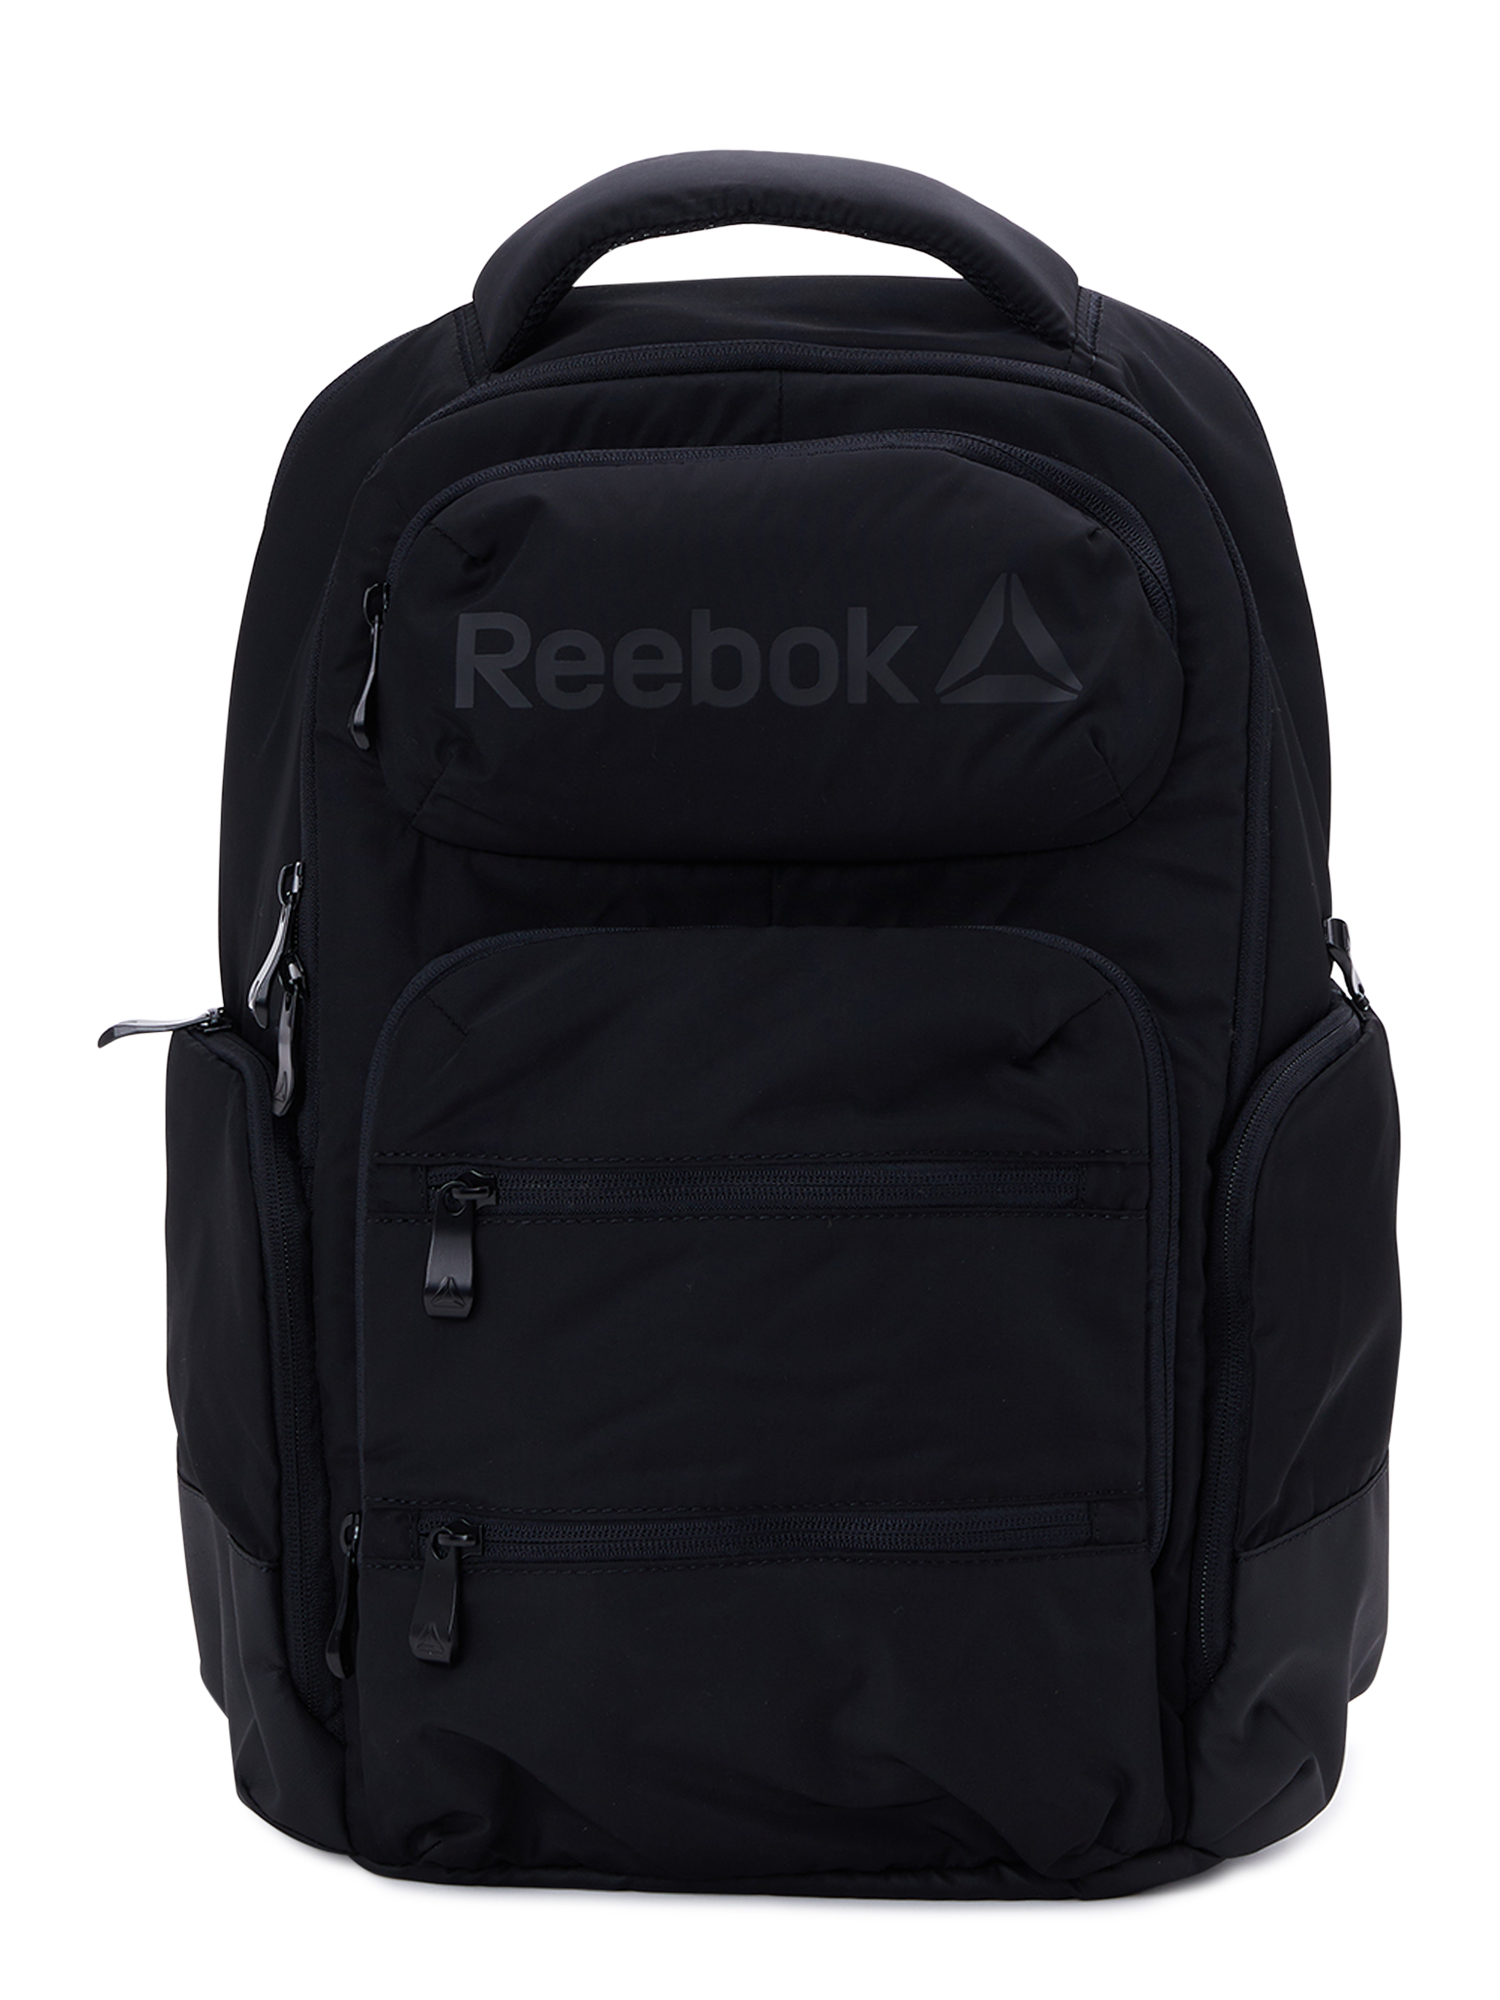 Reebok Unisex Adult Winter 16" Laptop Backpack, Black - image 1 of 6